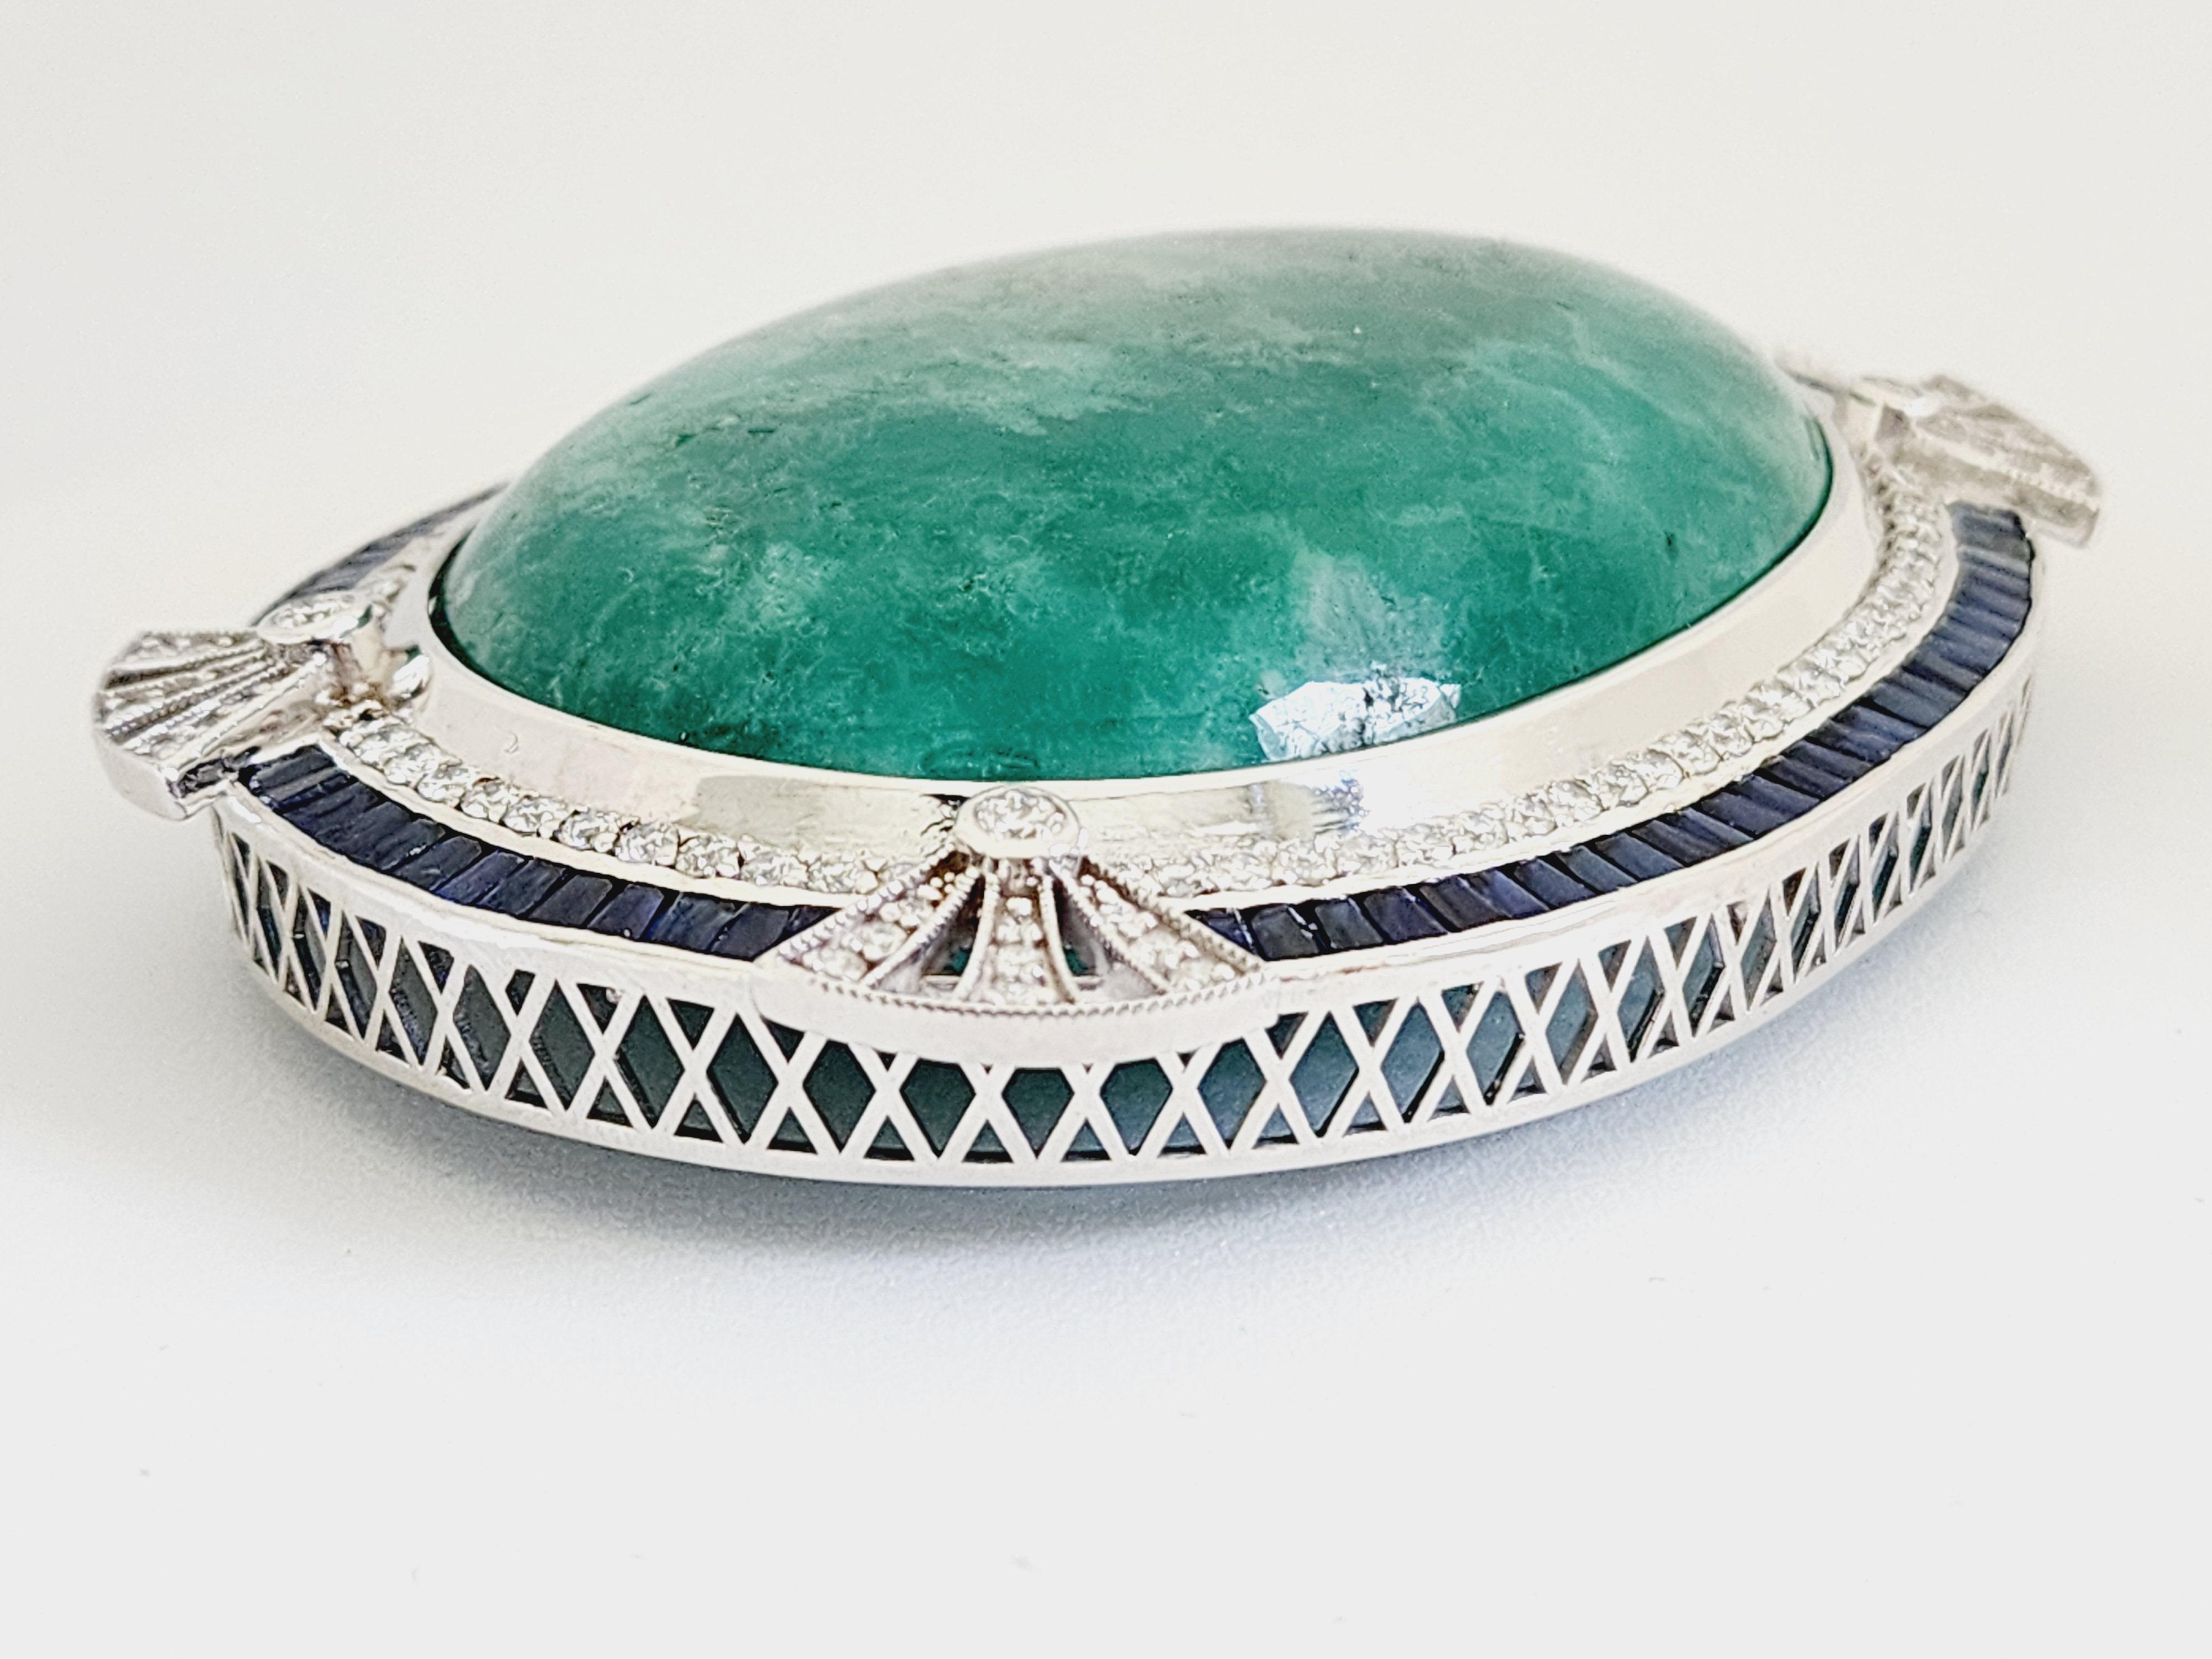 480 Carats Natural Emerald Diamond Sapphire Pendant White Gold 18 Karat For Sale 2